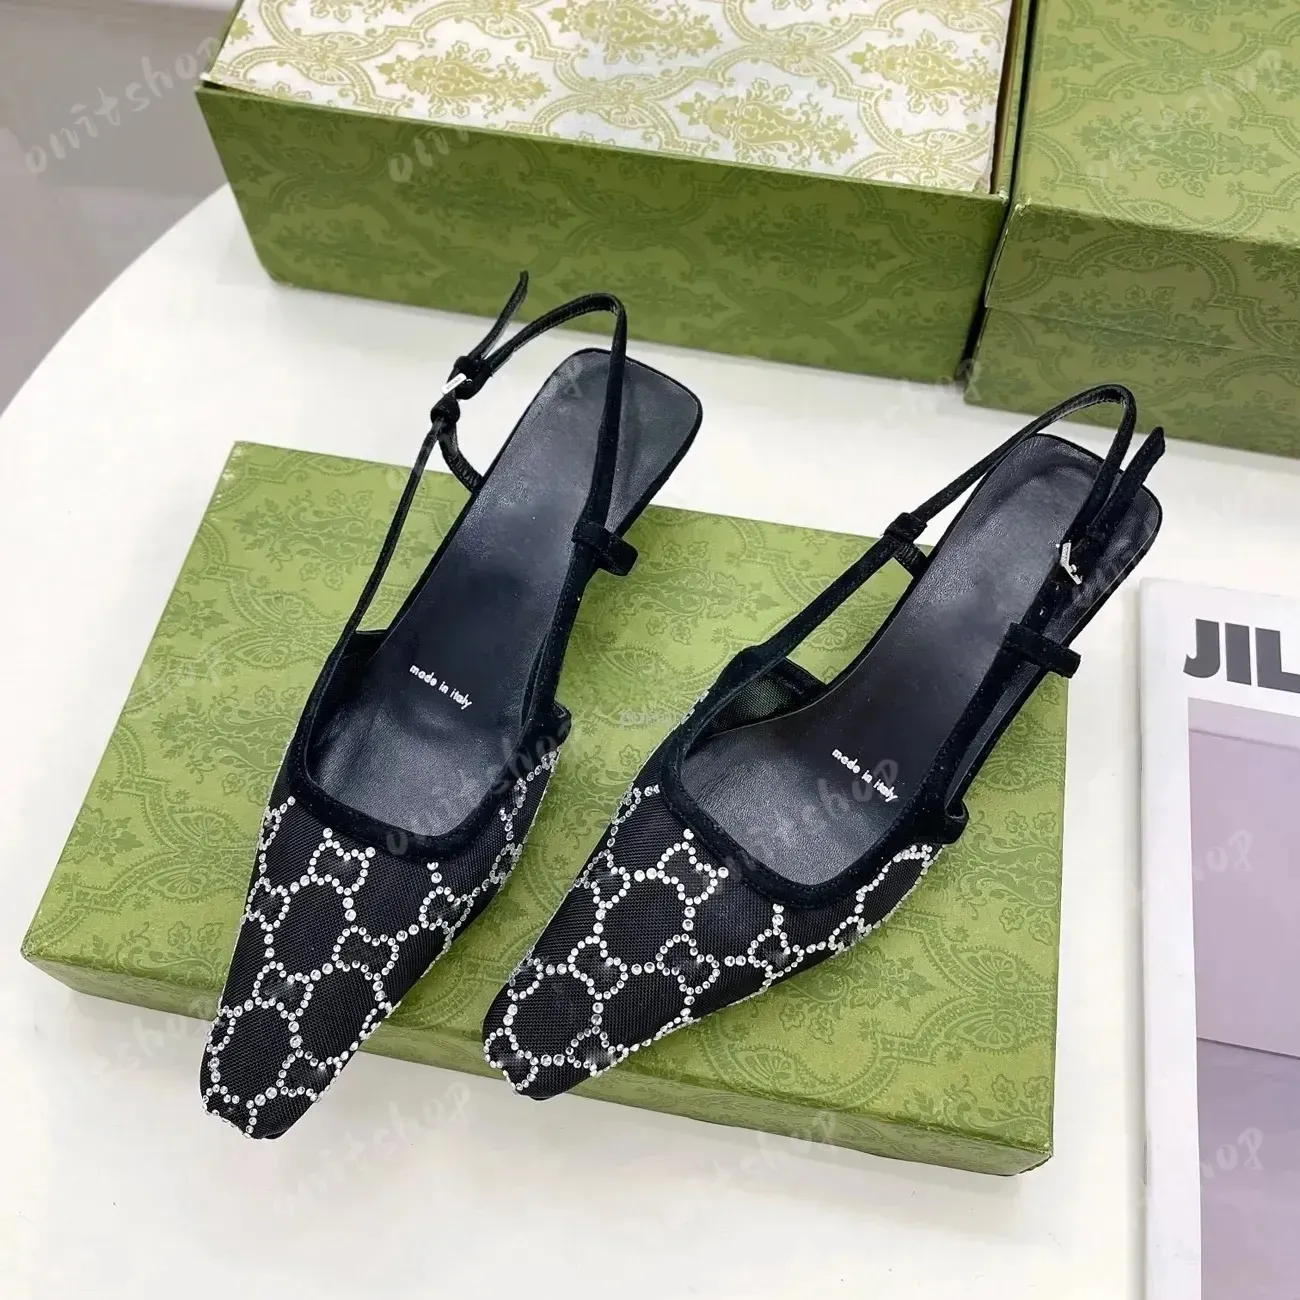 Kleiderschuhe Designer Slingback High Heels Sandalenleder 7,5 cm 3,5 cm schwarzes Netz mit Kristallen funkelnde Druckschuhe Gummi Sandalen Frauen Ank